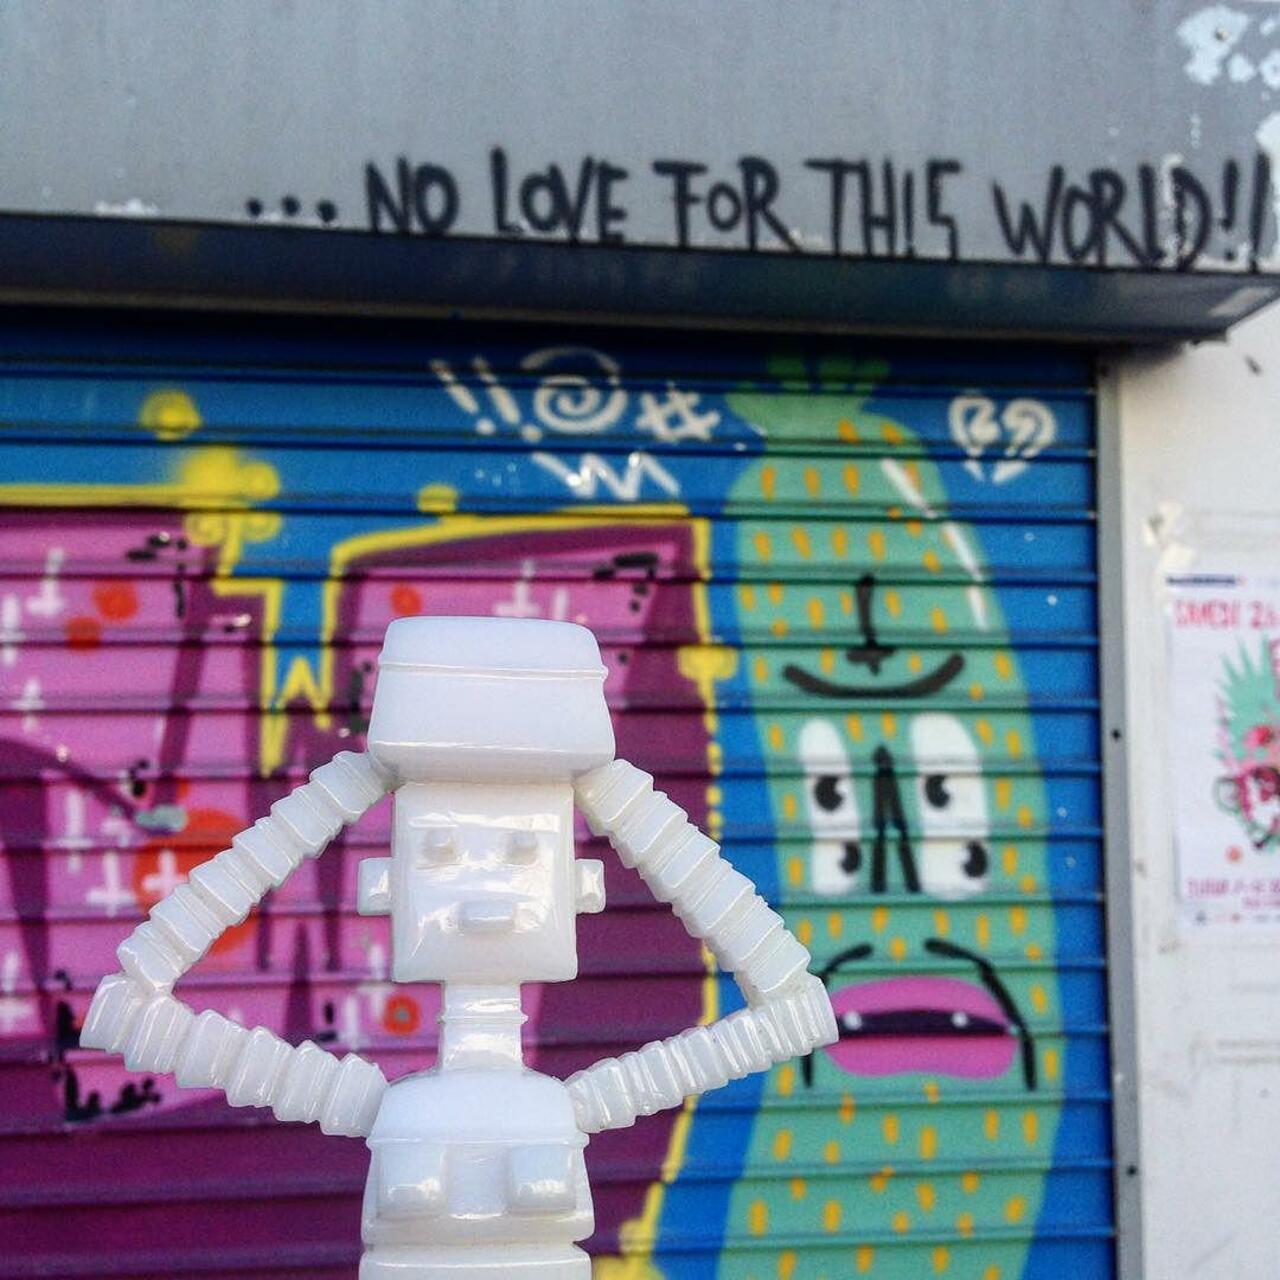 k8wanitas: RT circumjacent_fr: #Paris #graffiti photo by k8wanitas http://ift.tt/1ZnDOyv #StreetArt http://t.co/XOukaPGEjR